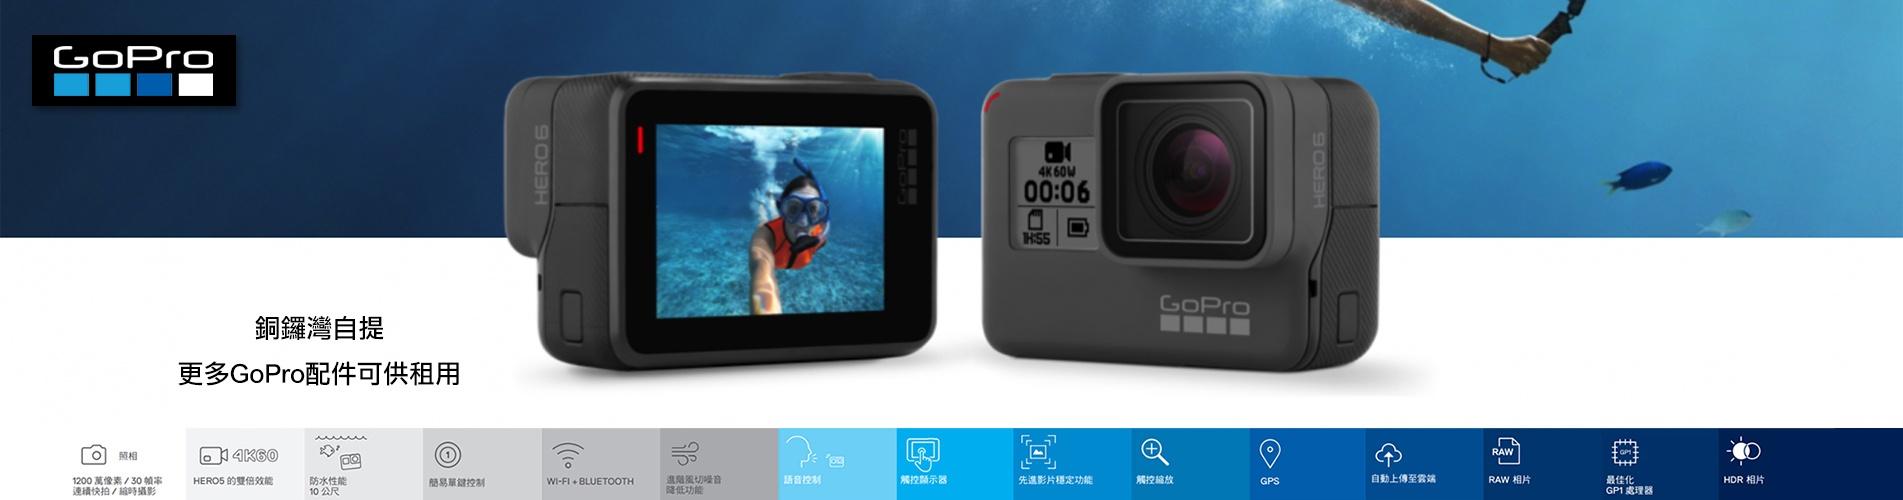 GoPro HERO6 Black 4K 超高清攝像機 (租借)